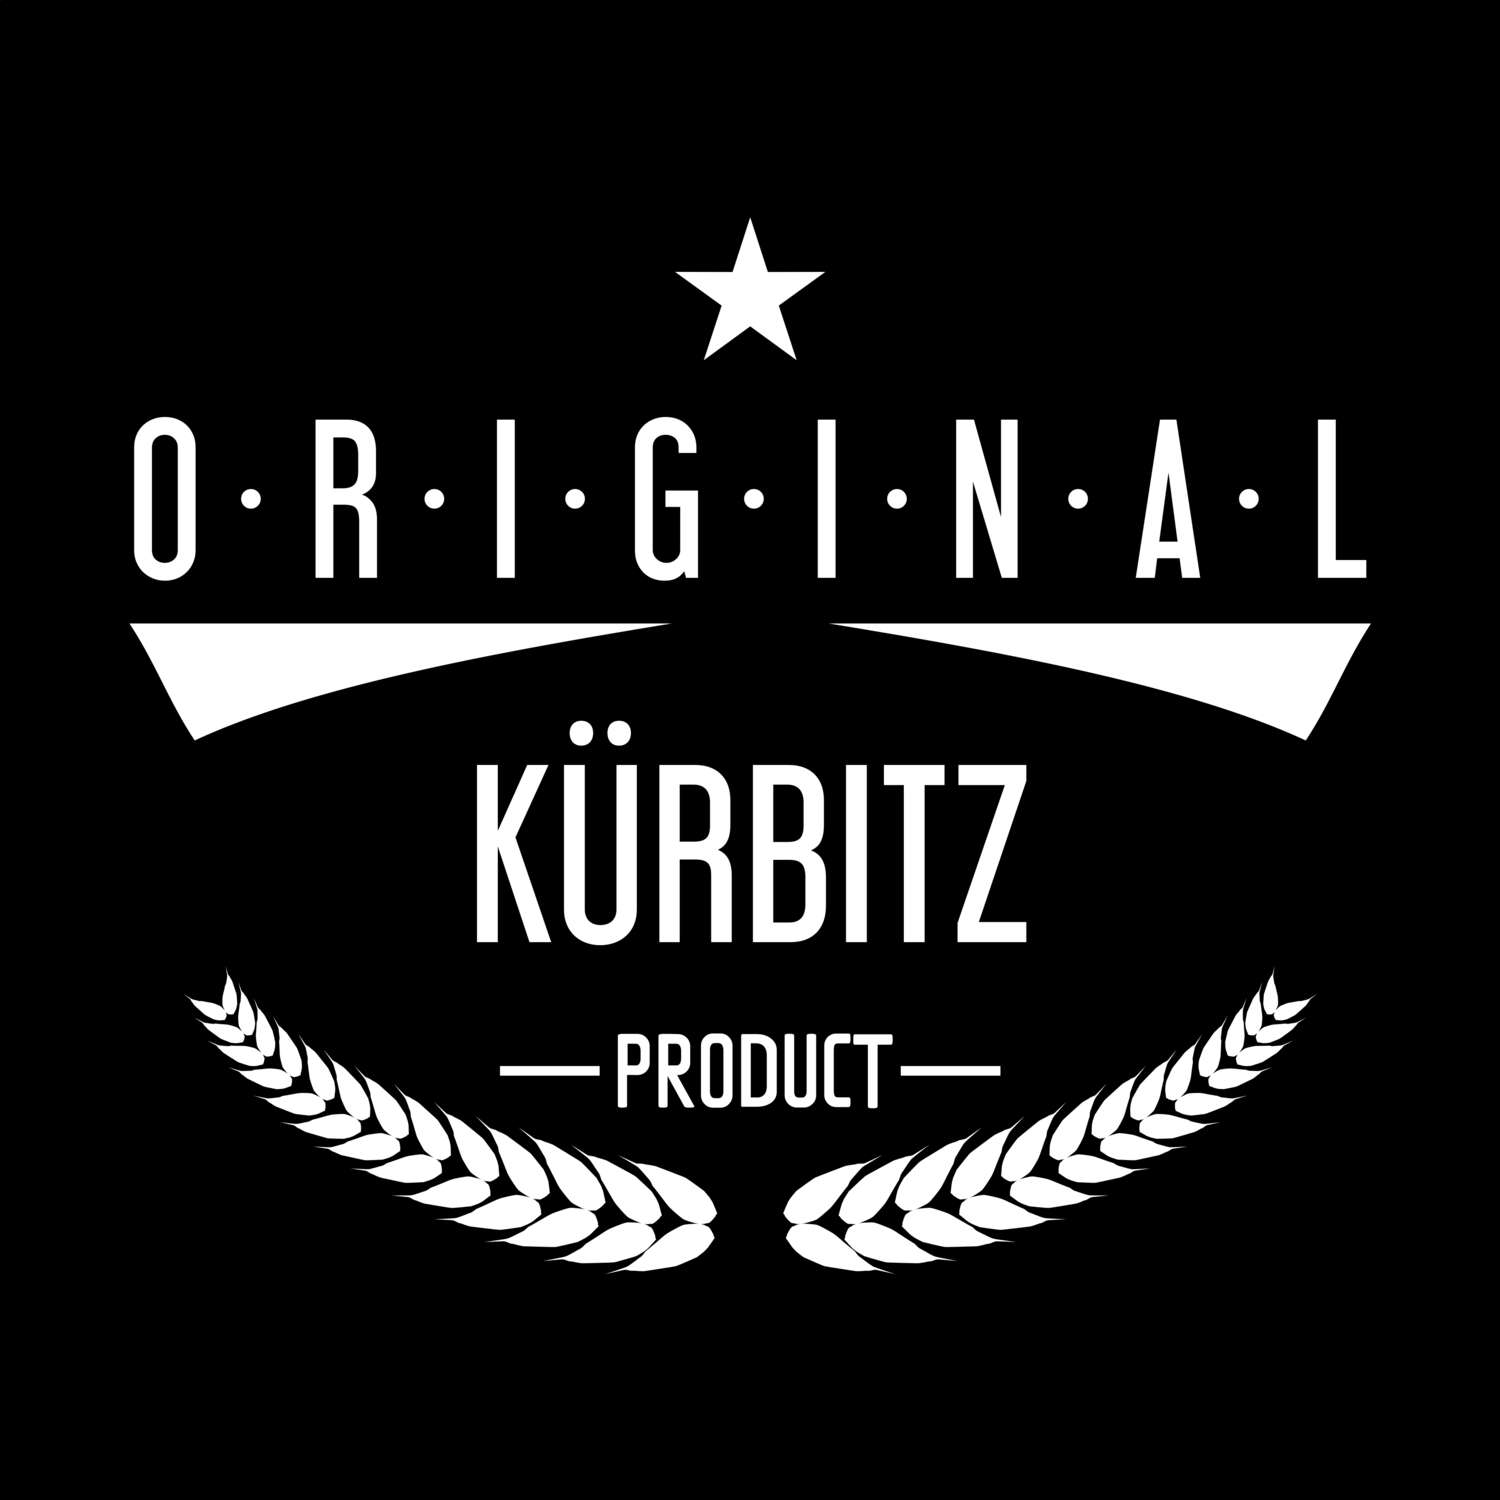 Kürbitz T-Shirt »Original Product«